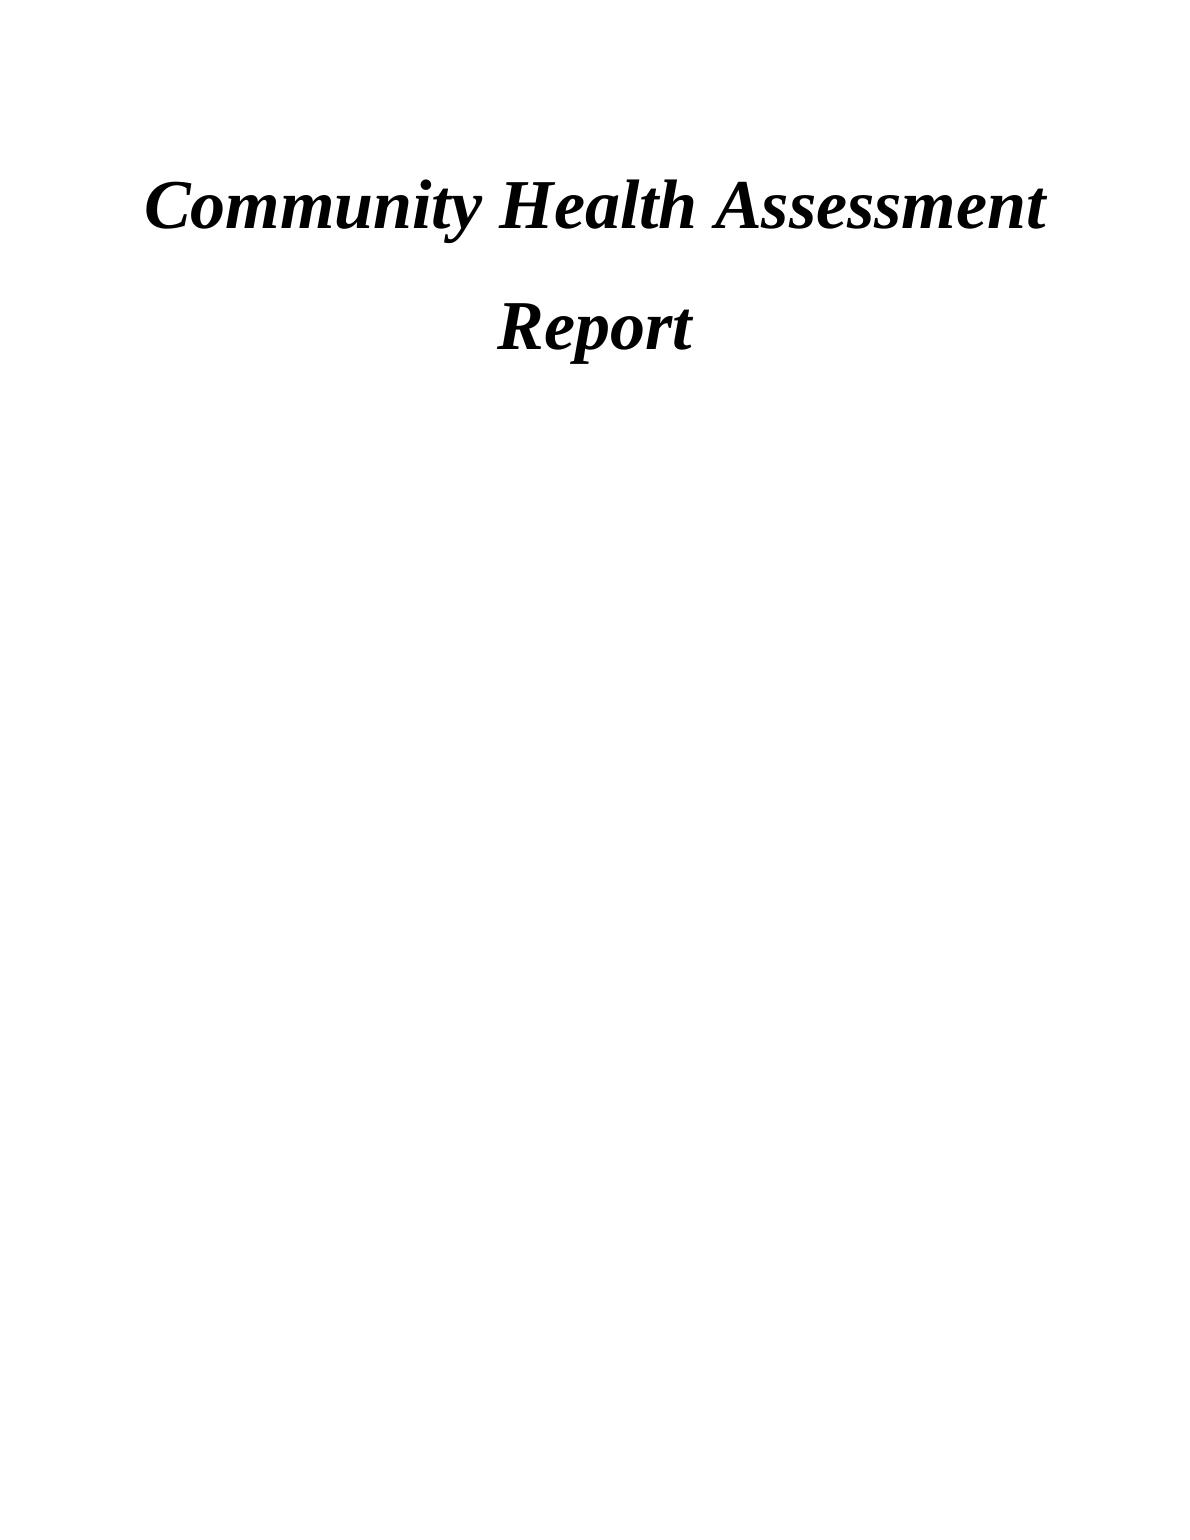 Community Health Assessment: Report_1